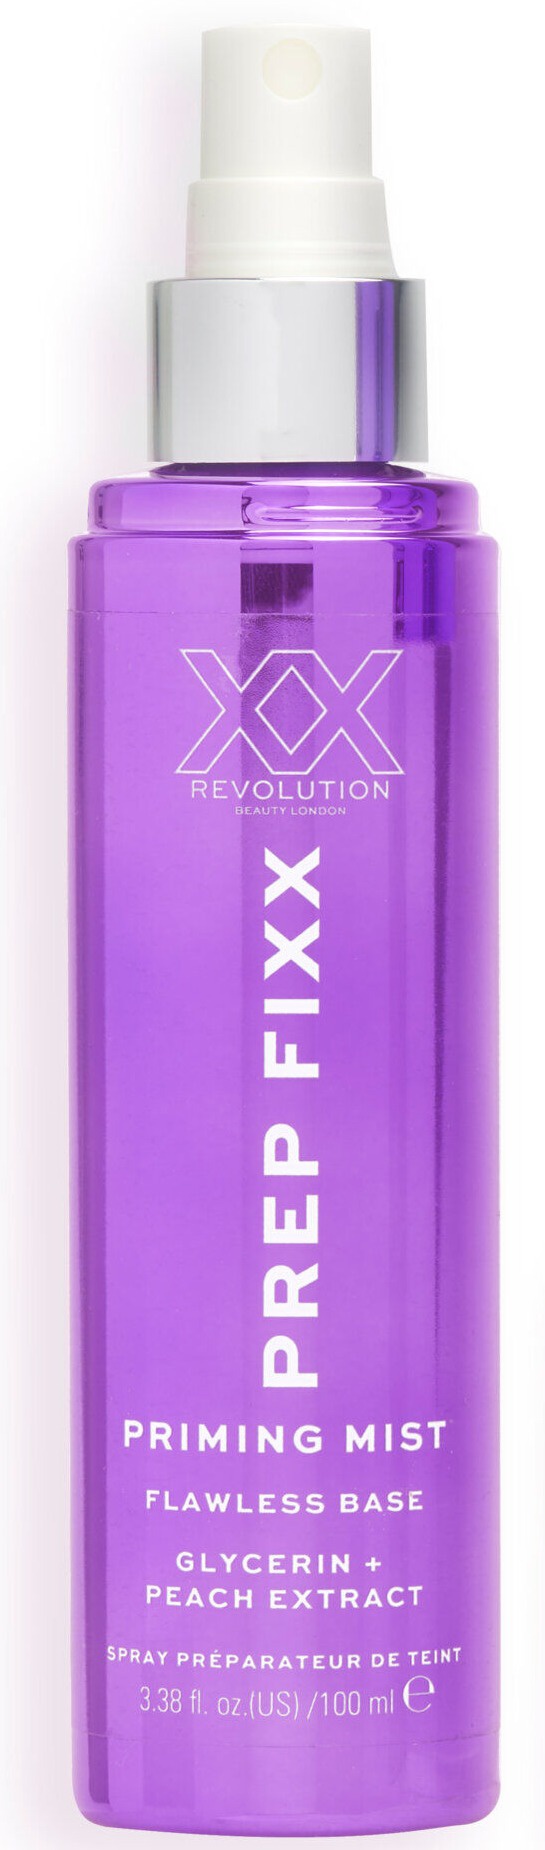 XX Revolution Prep Fixx Priming Mist